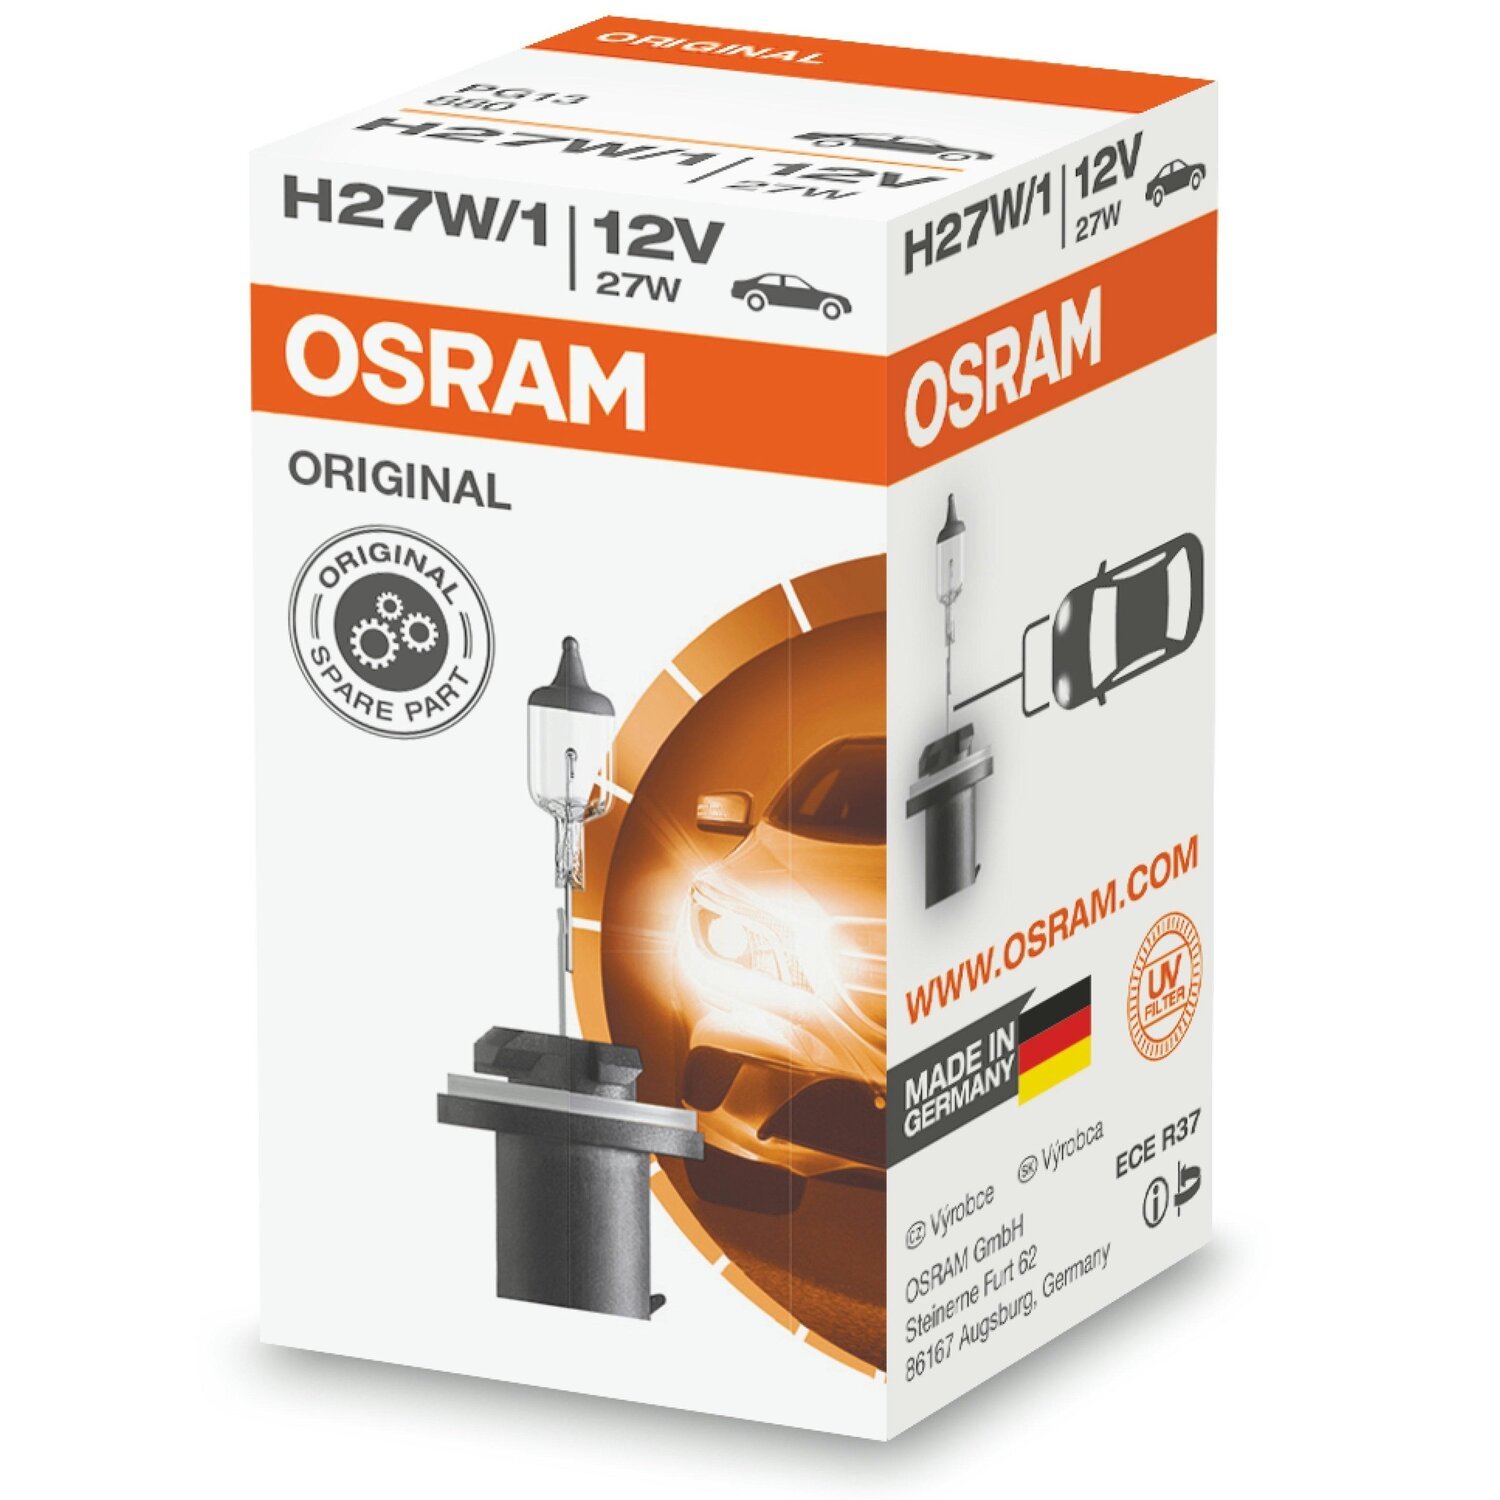 Лампа Osram накаливания 12V н27W/1 27W Pg13 Original Line (OS_880) фото 